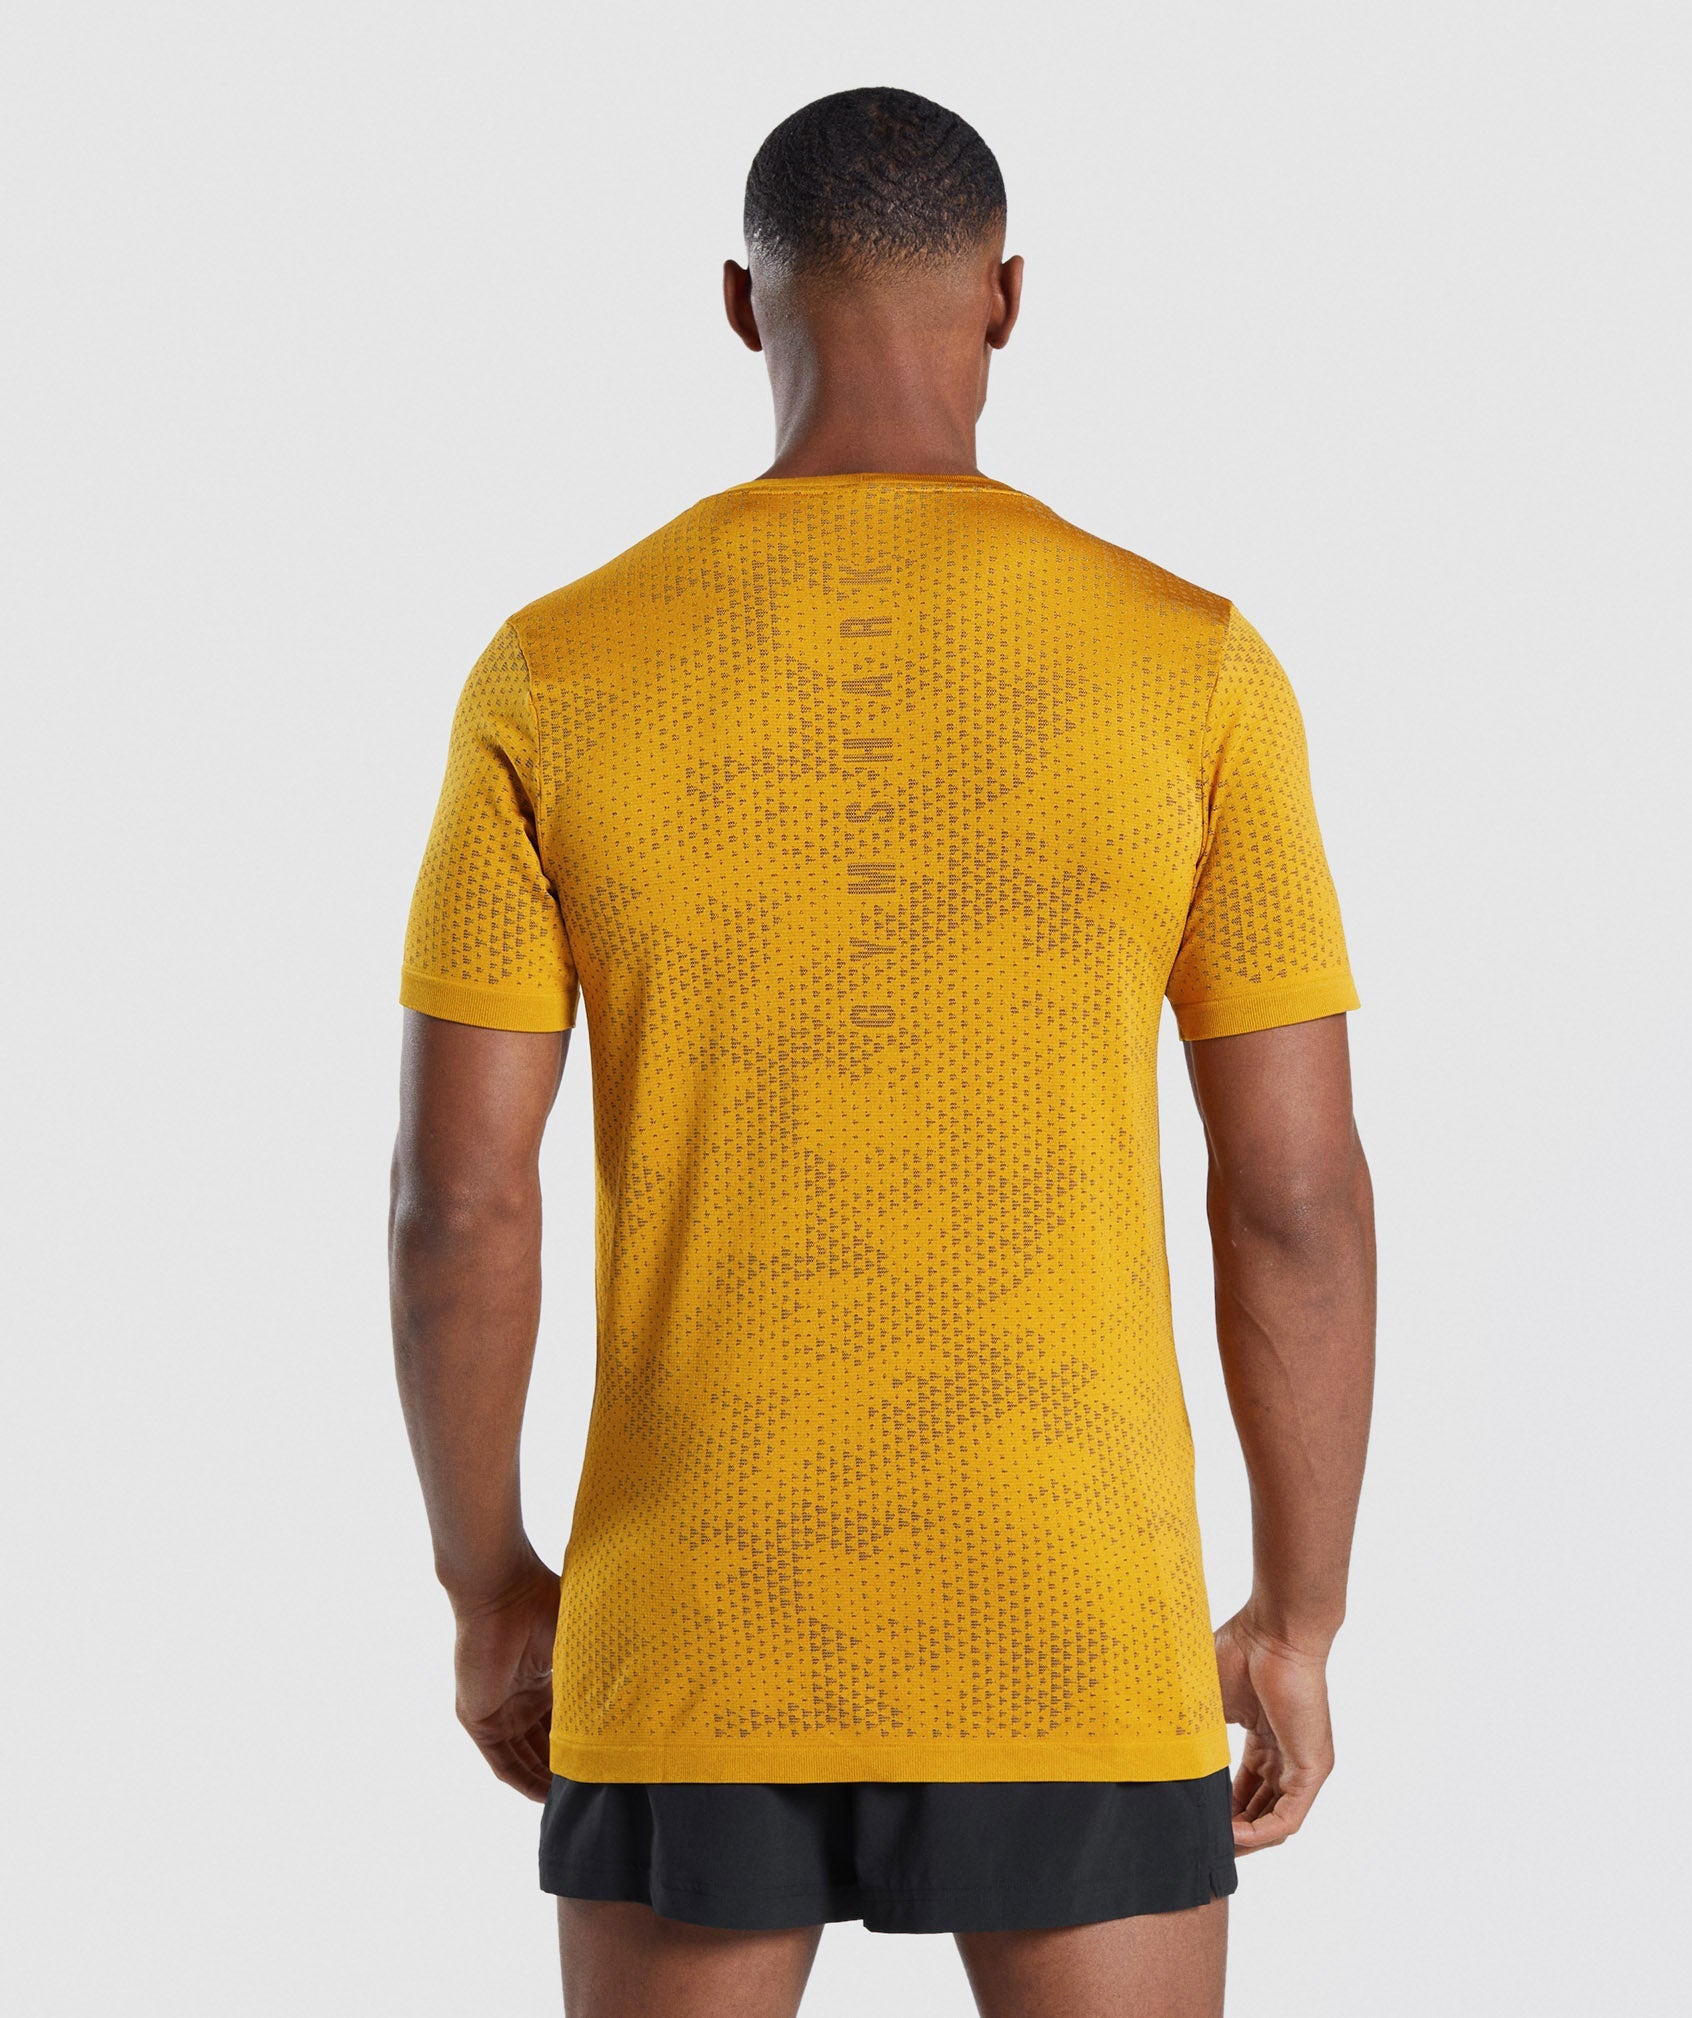 Sport Seamless T-Shirt in Turmeric Yellow/Black